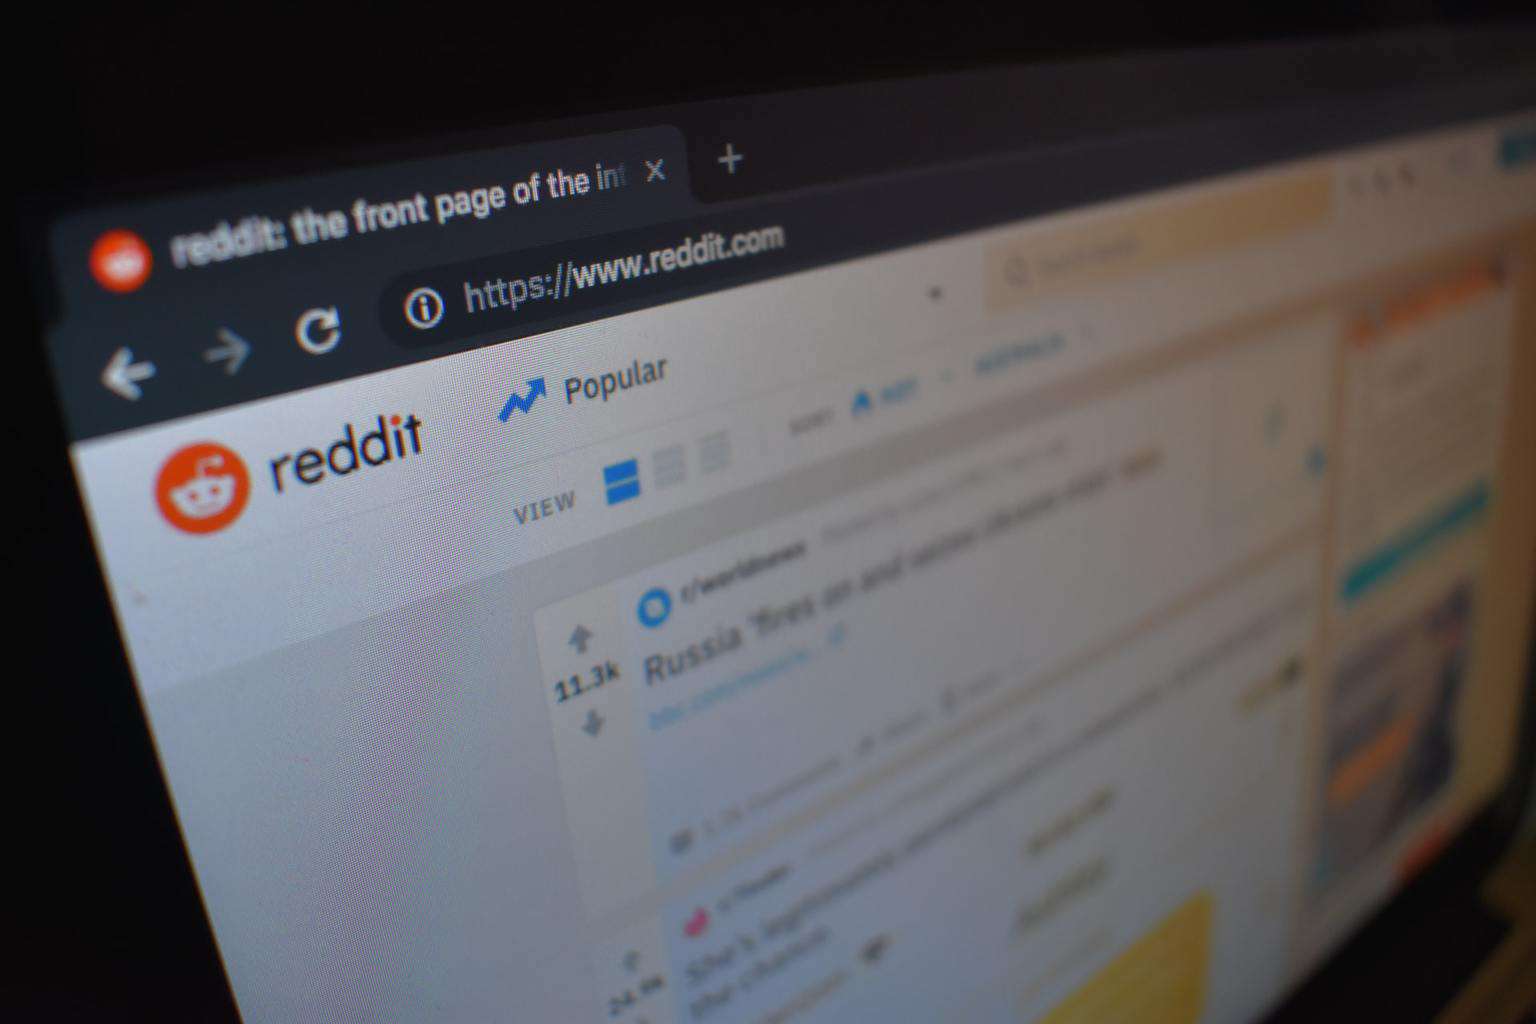 Reddit webpage opened on laptop